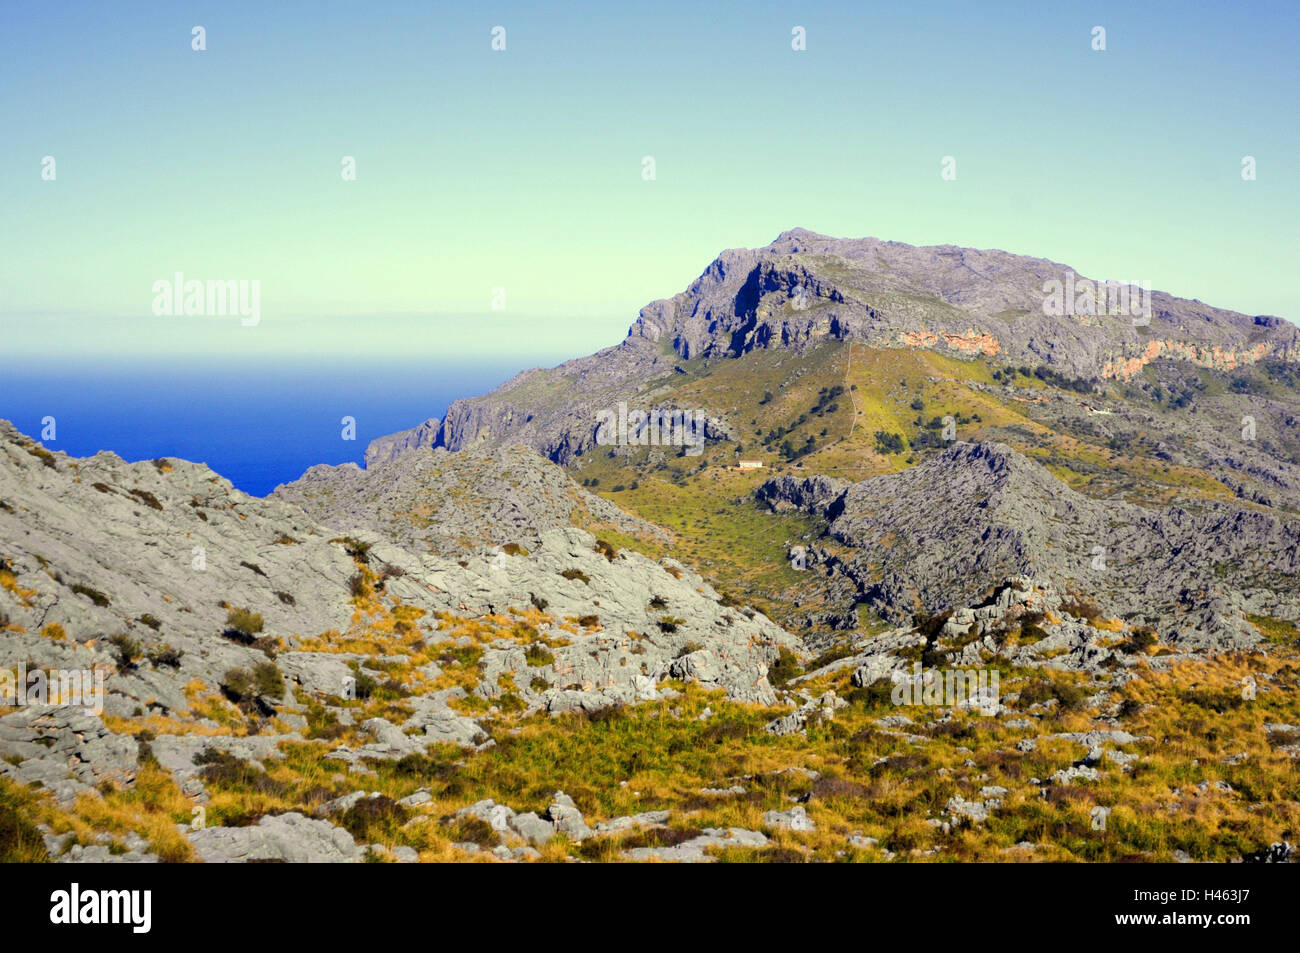 Spain, the Balearic Islands, Majorca, mountains, scenery, nature, nobody, island, horizon, Stock Photo